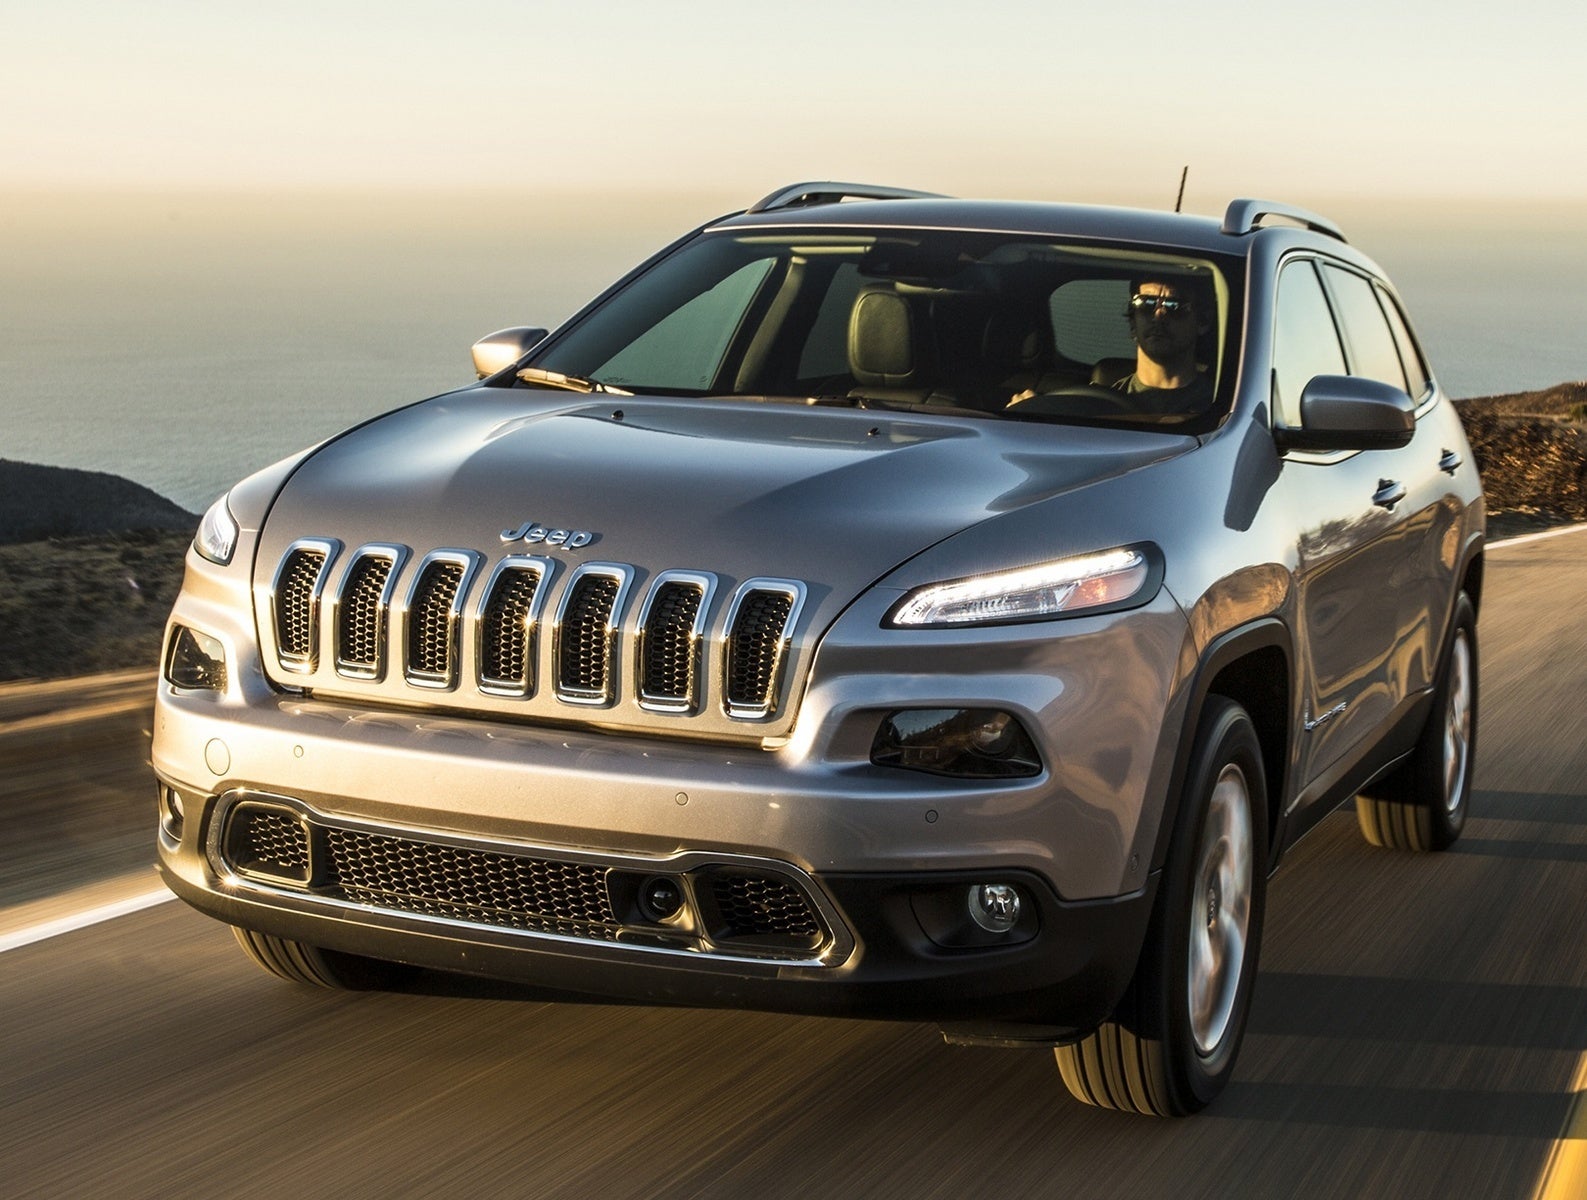 New 2015 / 2016 Jeep Cherokee For Sale - CarGurus